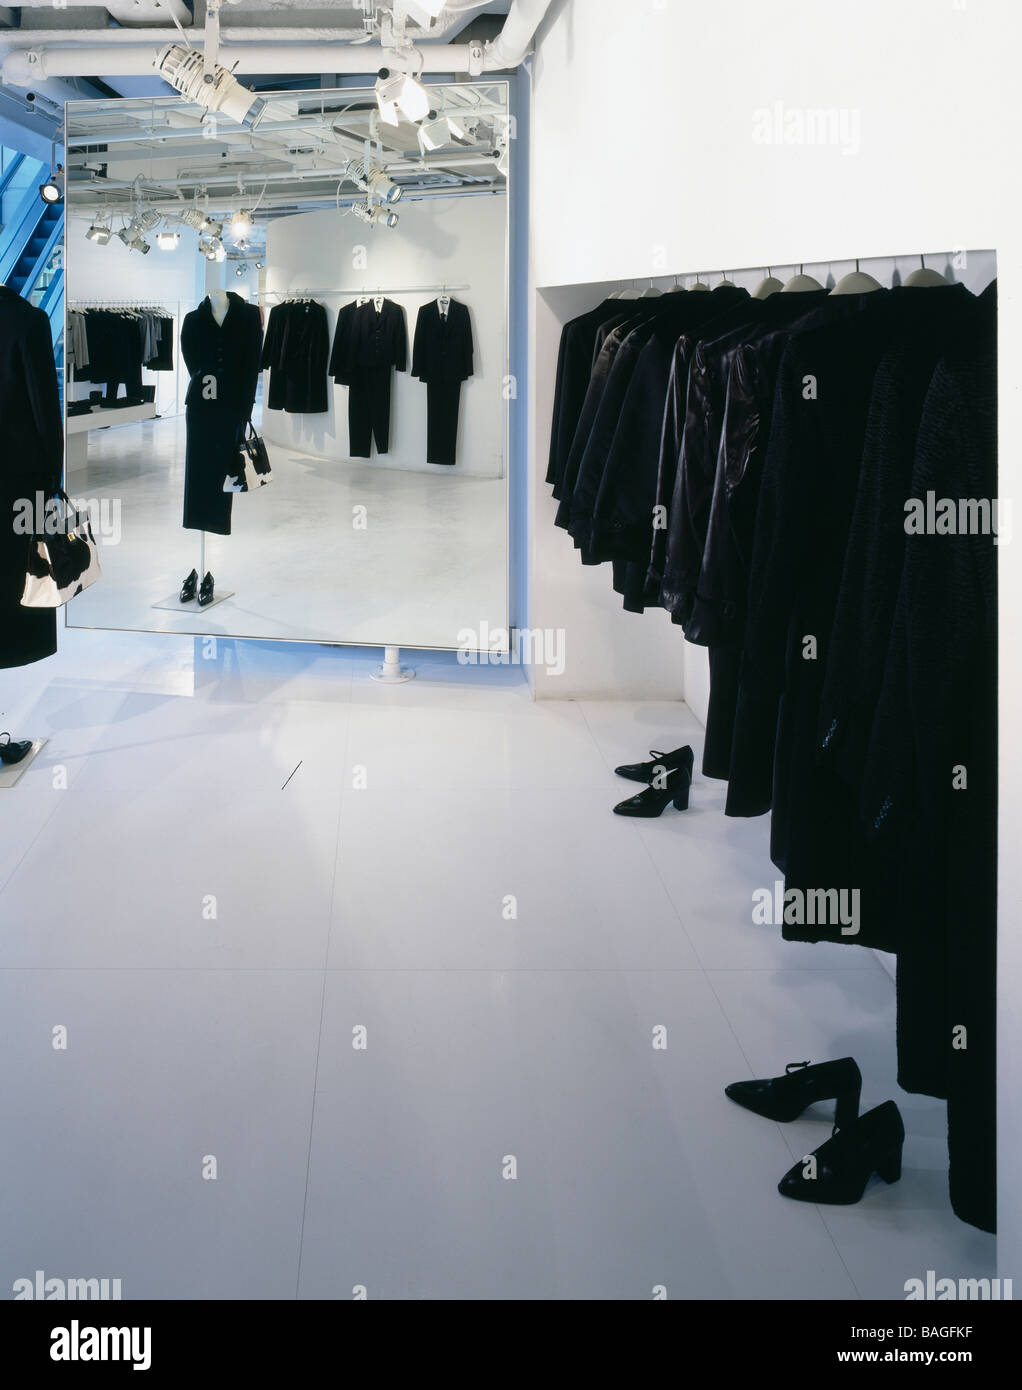 Dkny tienda vista mostrando pared transversal ferroviaria longitud ropa negra free standing vestido maniqui zapatos dkny bond Fotografía de stock - Alamy